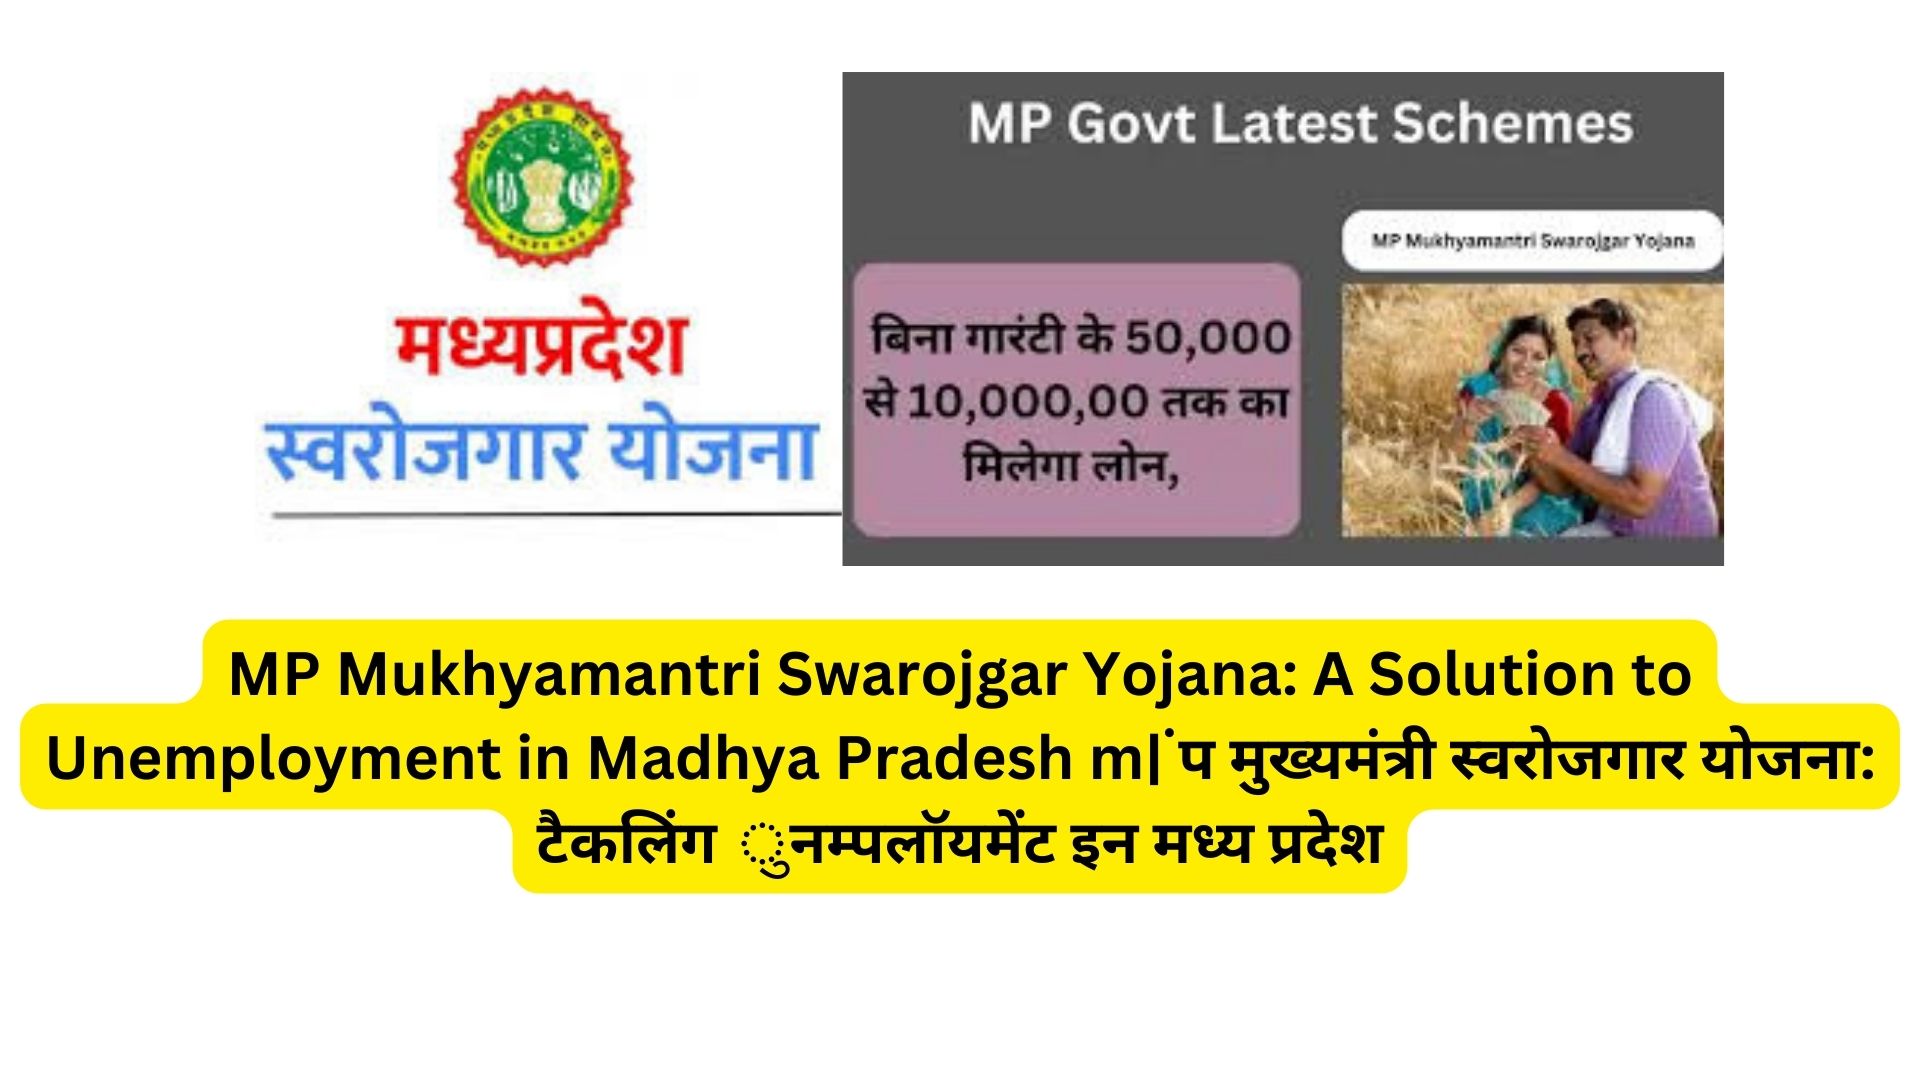 MP Mukhyamantri Swarojgar Yojana: A Solution to Unemployment in Madhya Pradesh m| ंप मुख्यमंत्री स्वरोजगार योजना: टैकलिंग ुनम्पलॉयमेंट इन मध्य प्रदेश